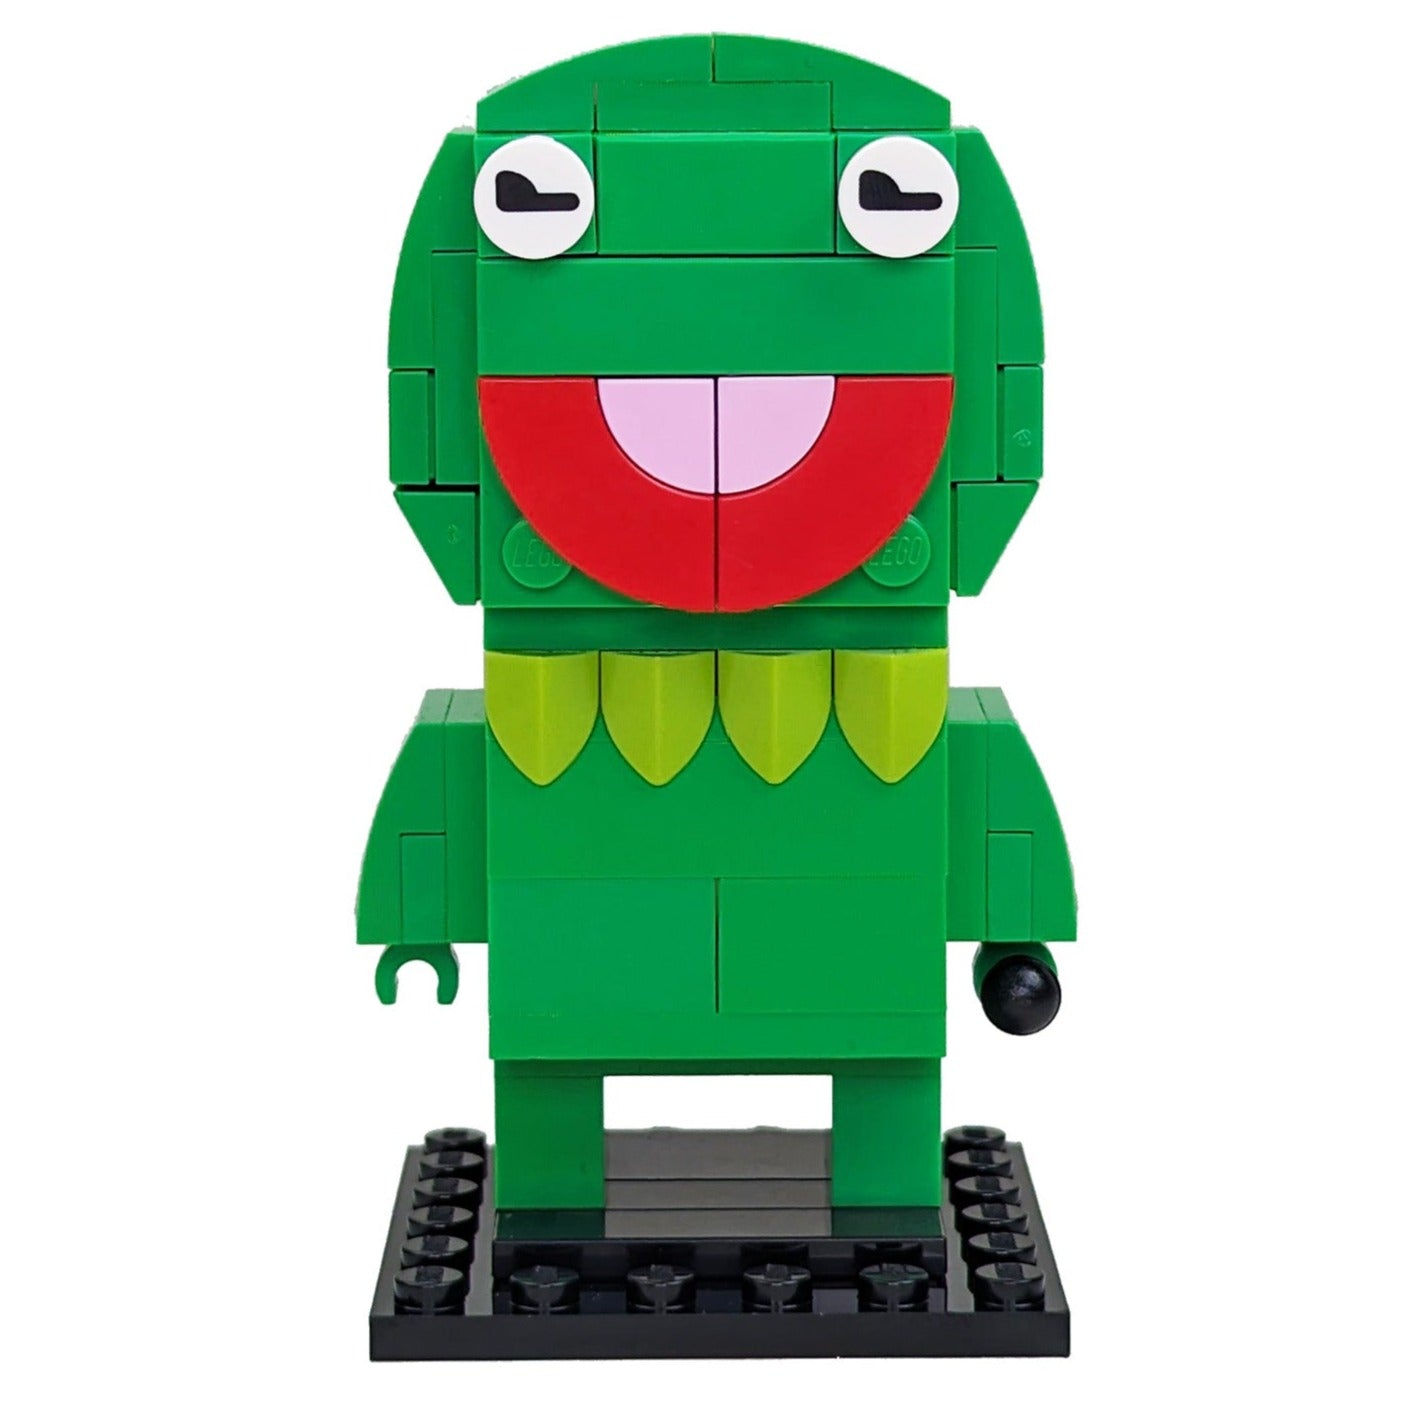 Kermit BrickHeadz made using LEGO parts